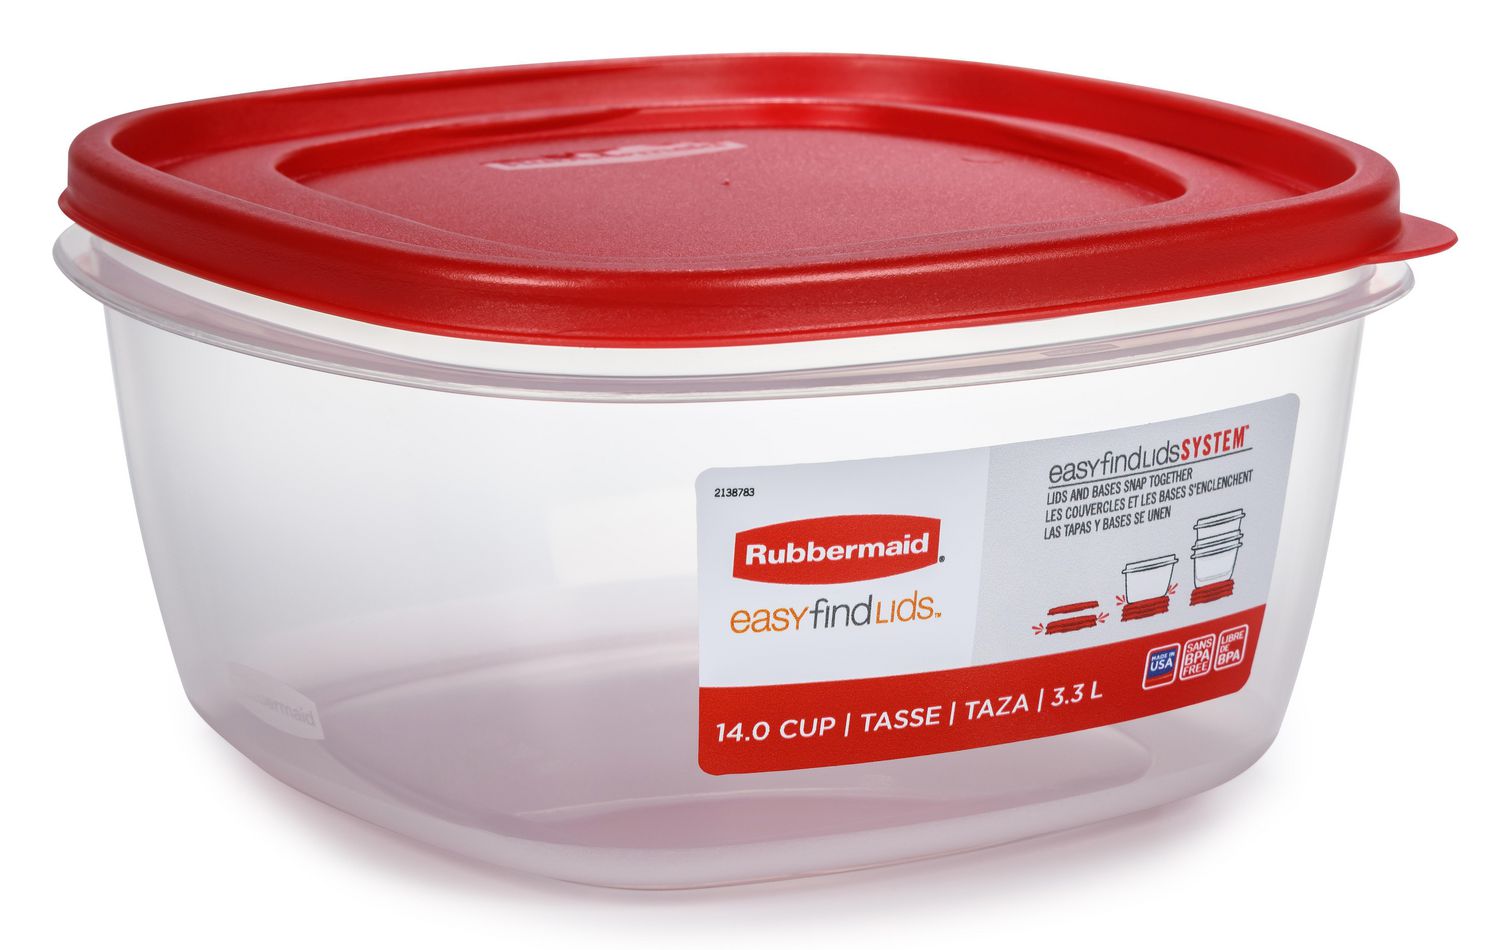 Rubbermaid EasyFindLids Food Storage Container, 3.3L